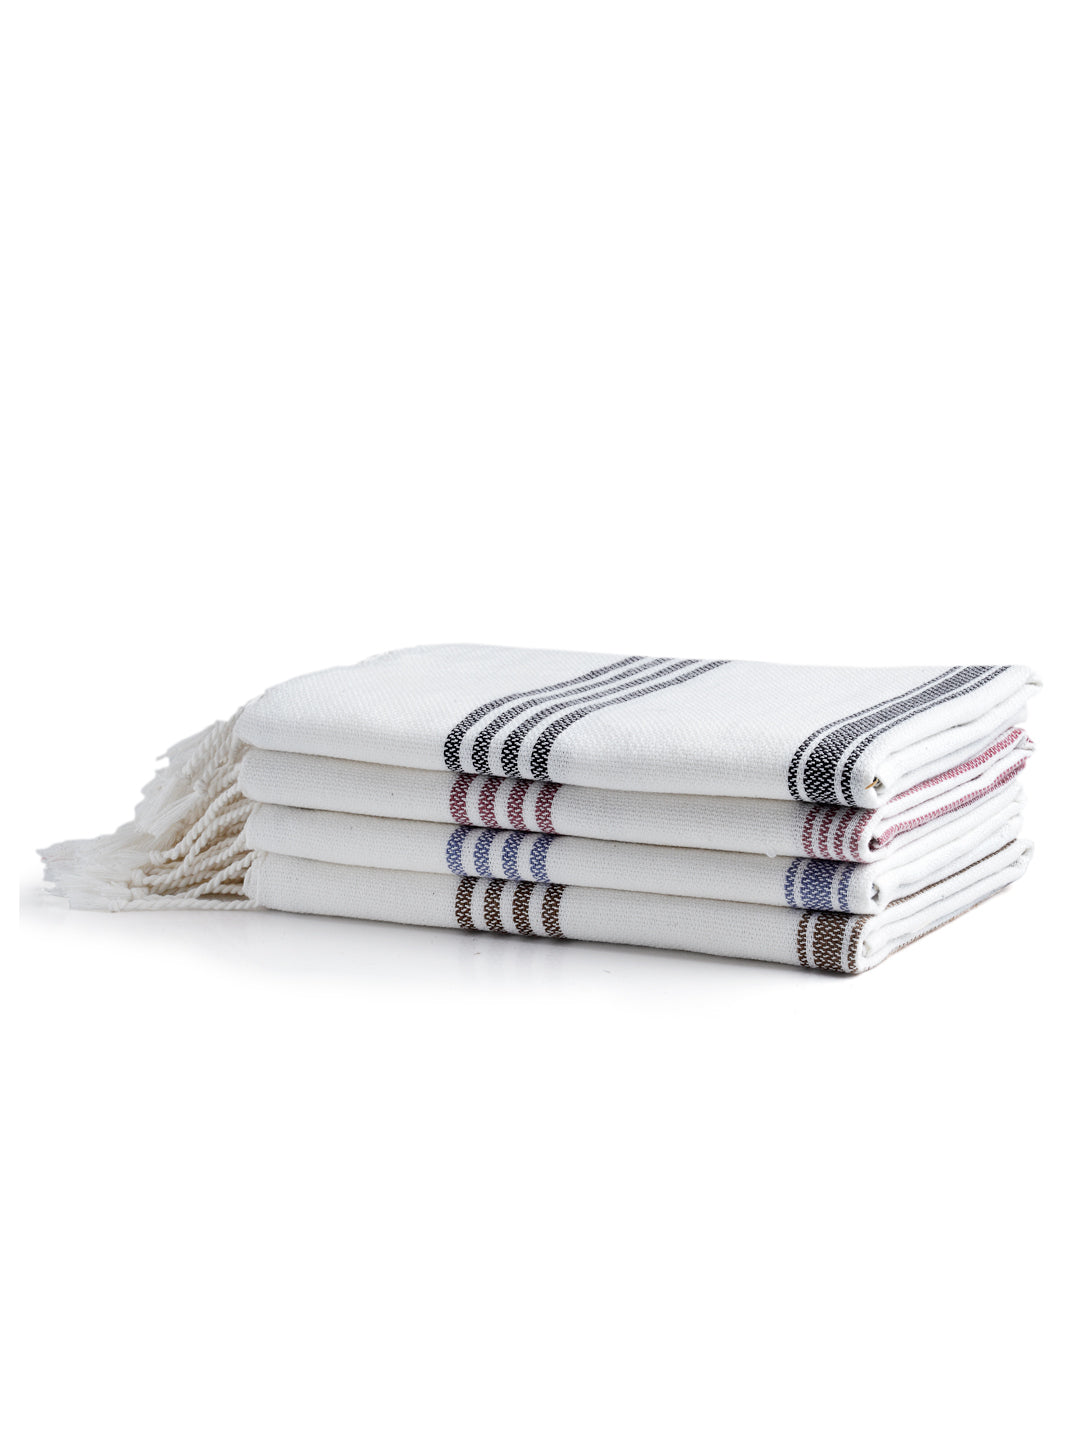 Arrabi Multi Solid Handwoven Cotton Hand Towel (Set of 4) (90 X 35 cm)